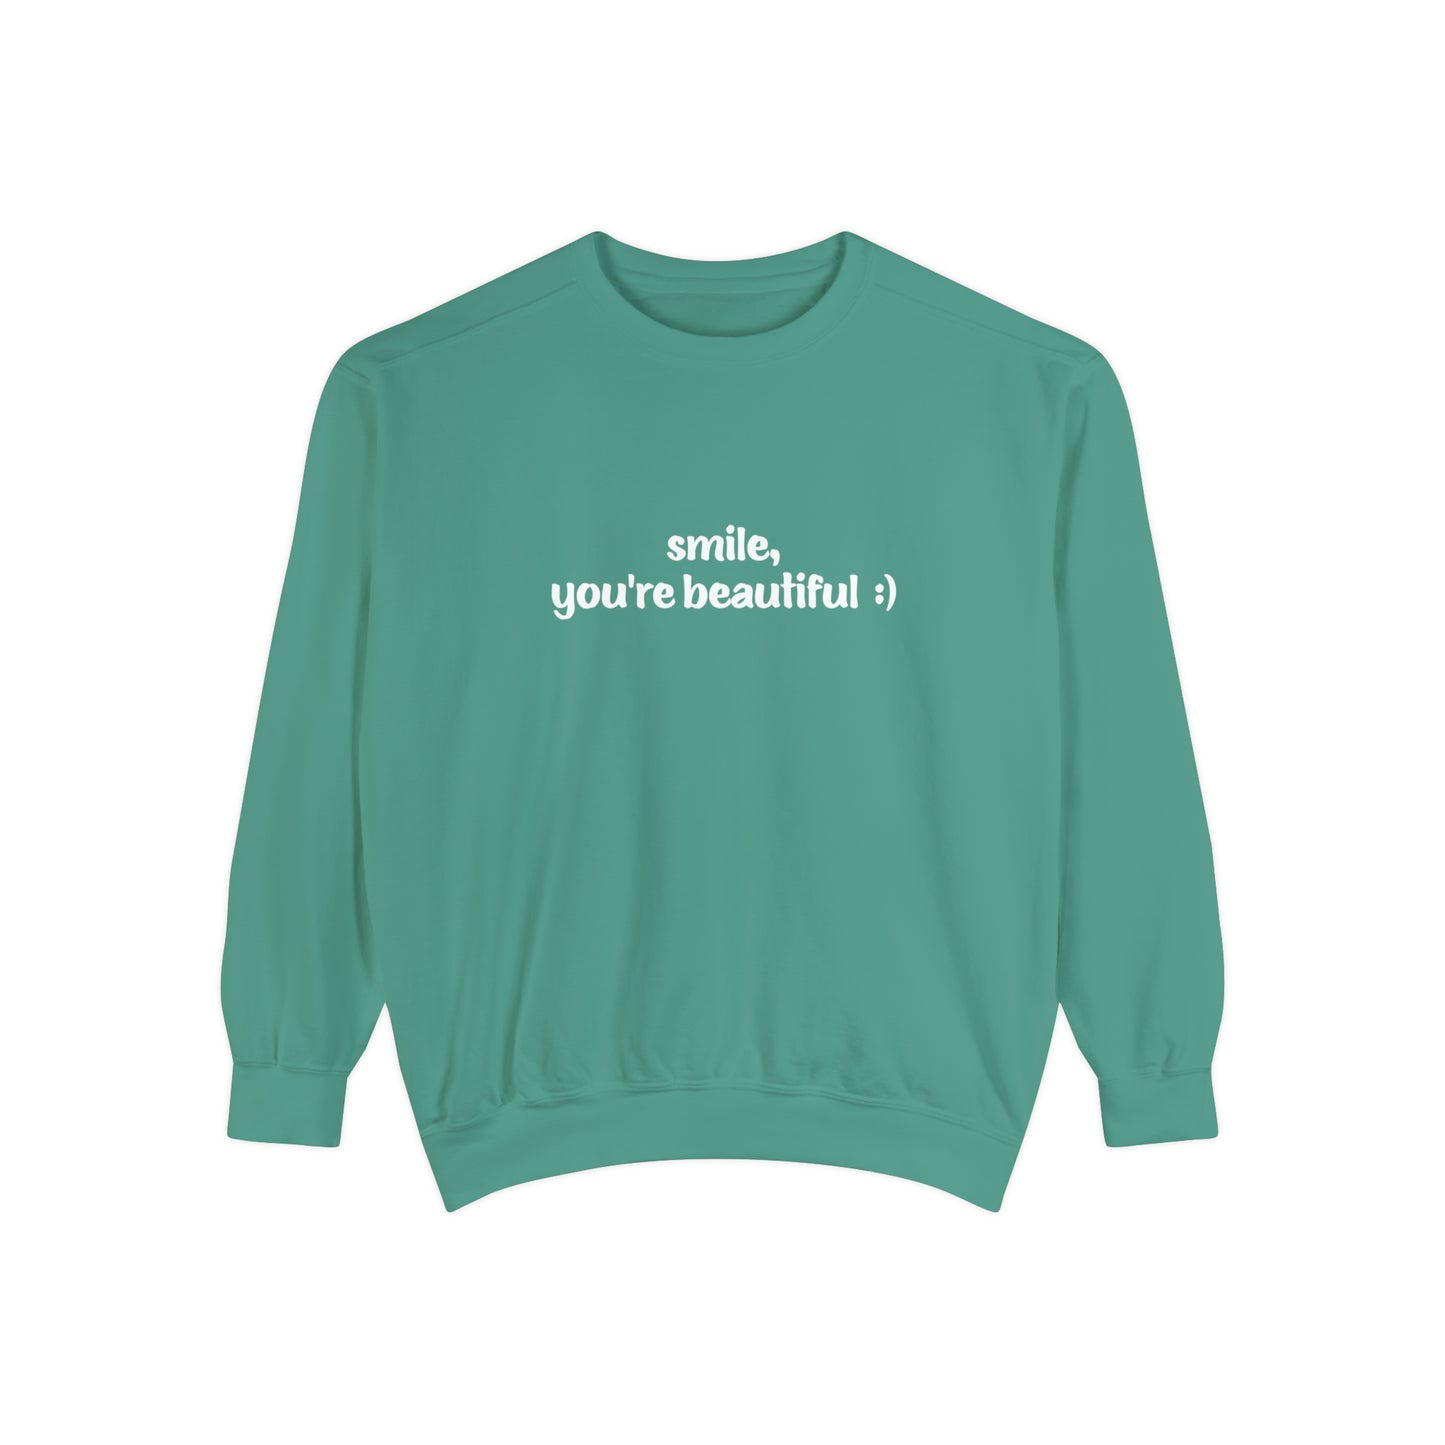 smile, you're beautiful :) | unisex premium sweatshirt